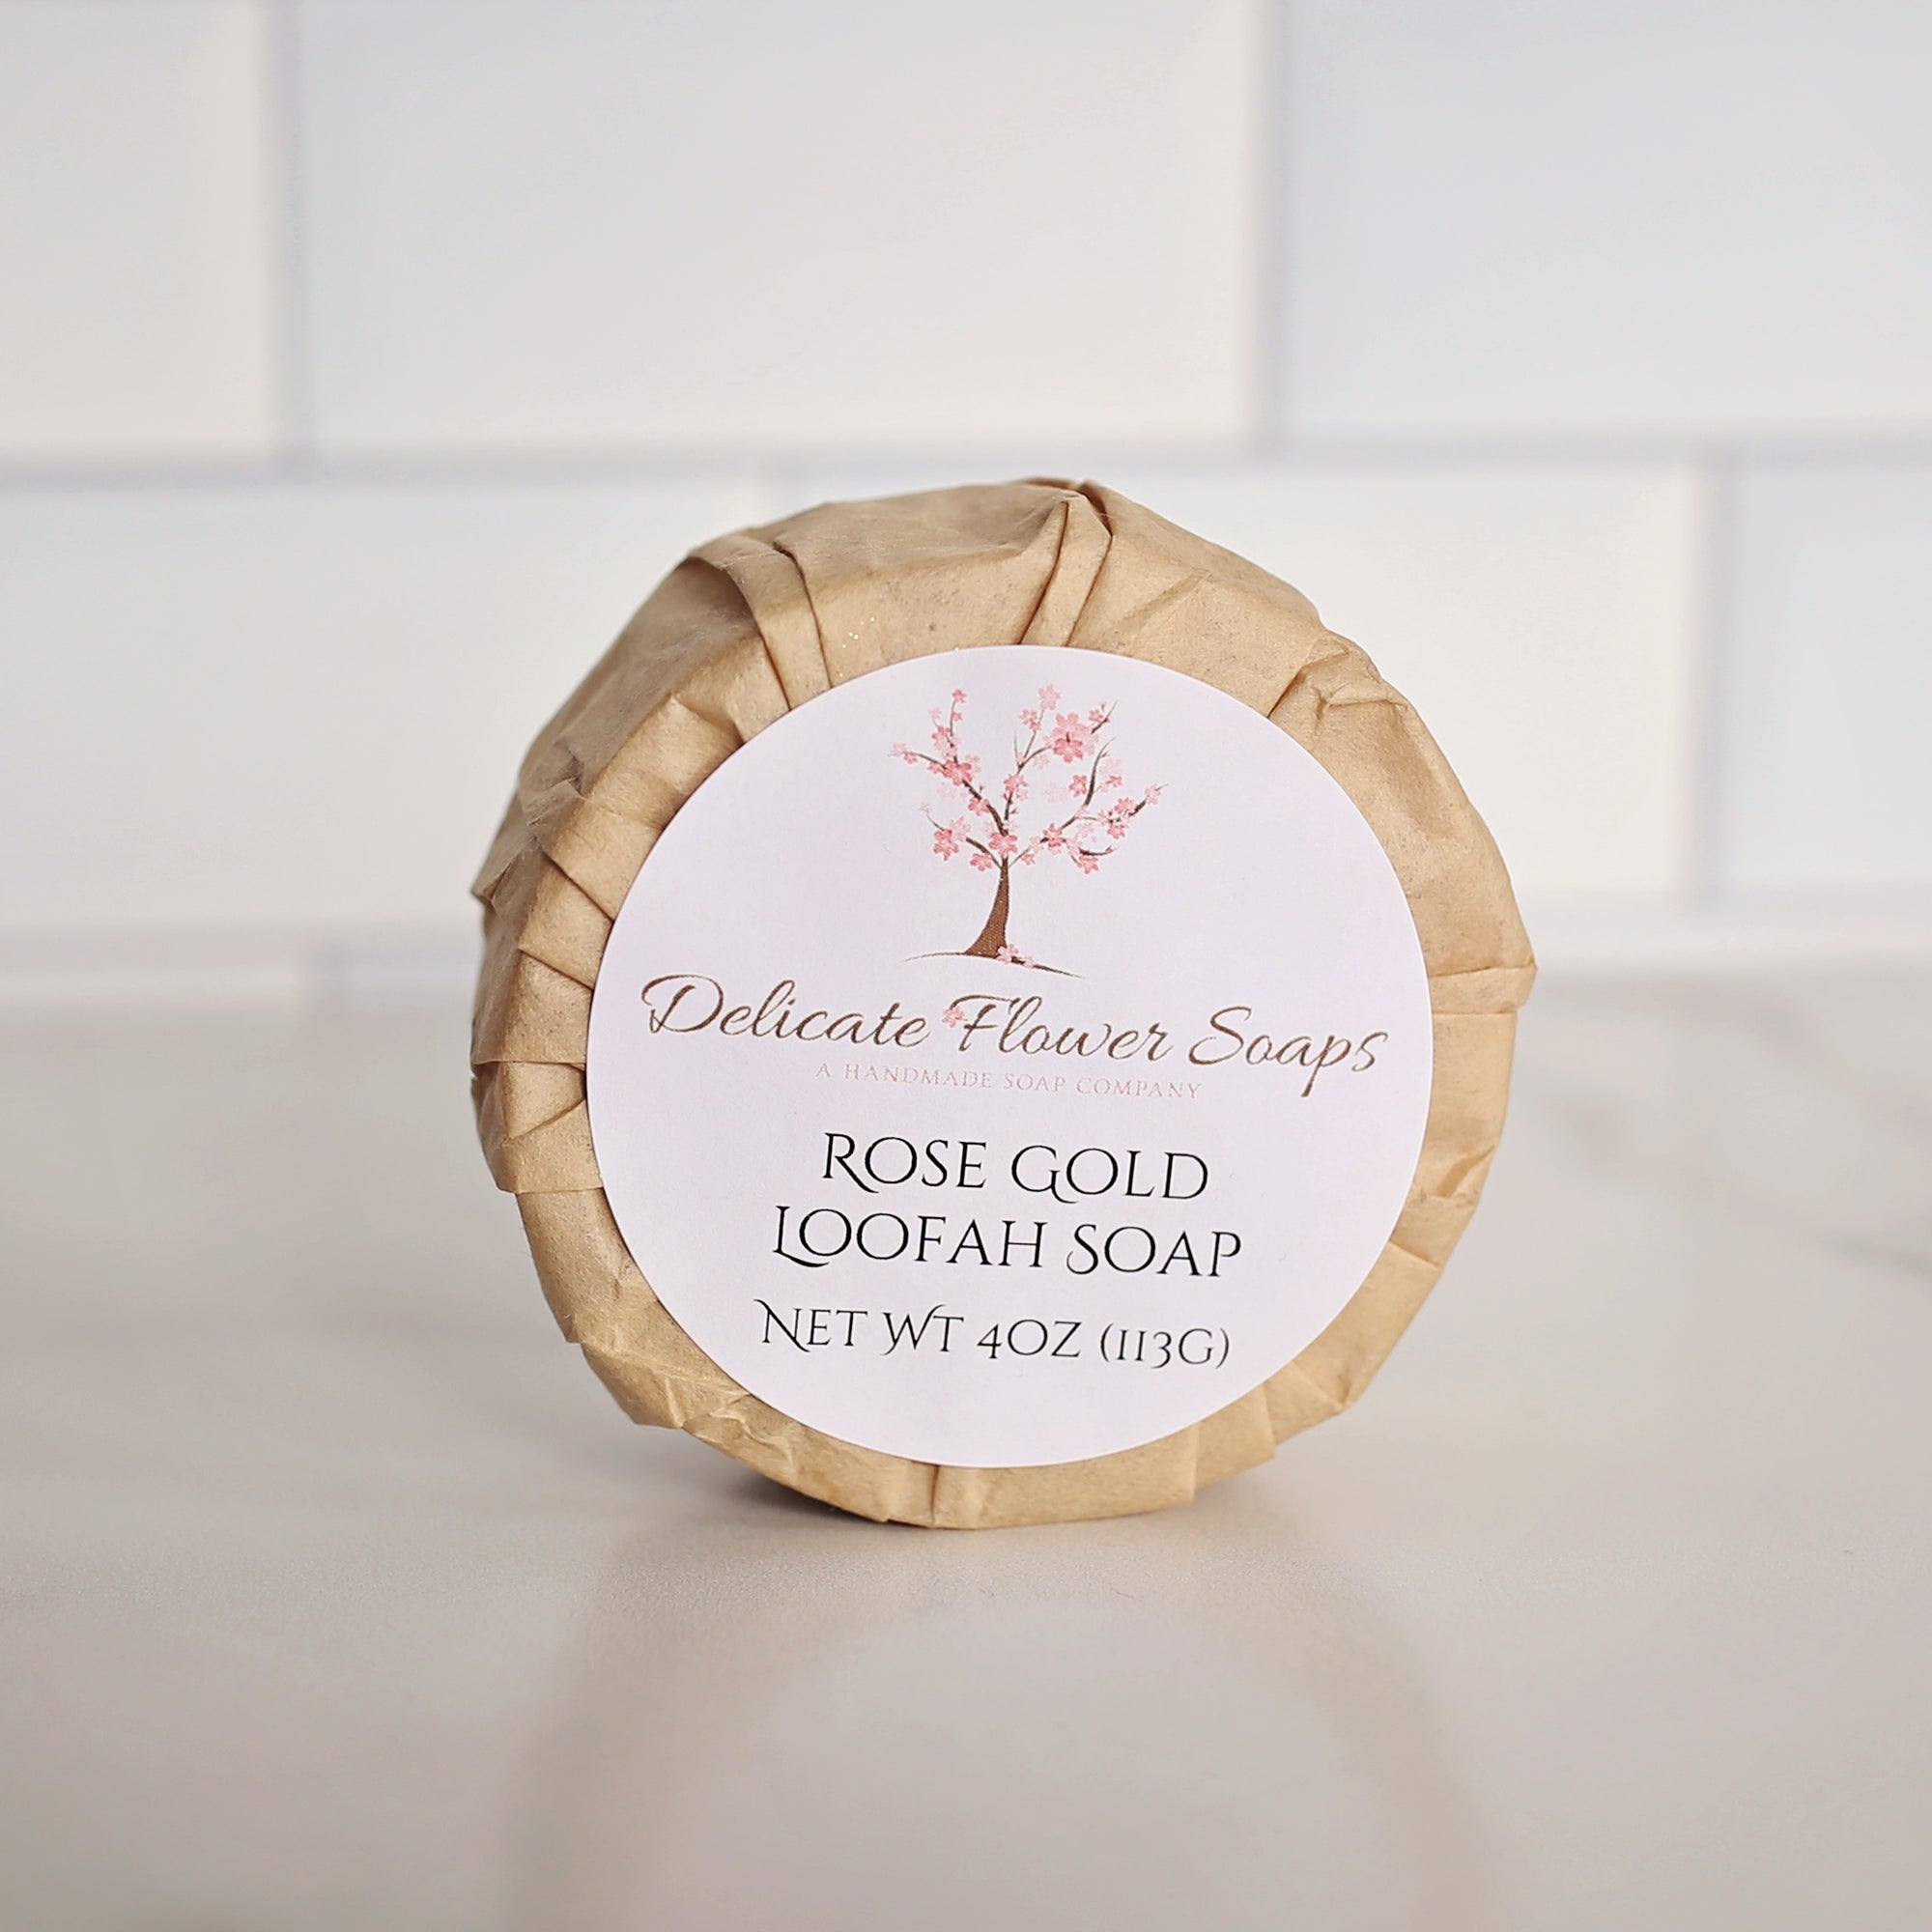 Rose Gold Loofah Soap